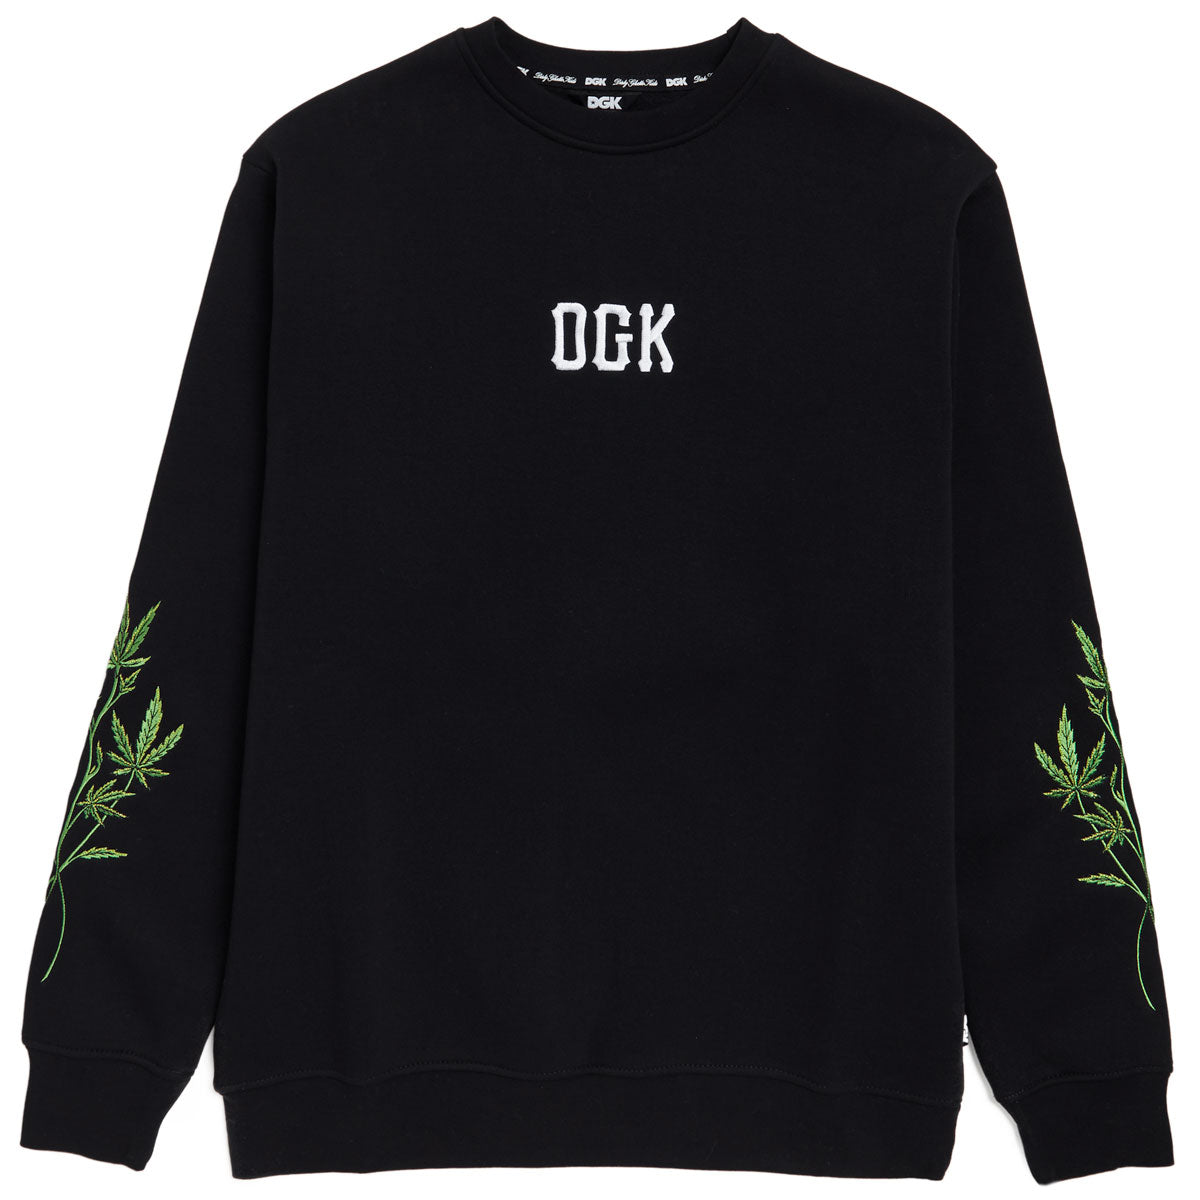 DGK Lay Low Crewneck Sweatshirt - Black image 1